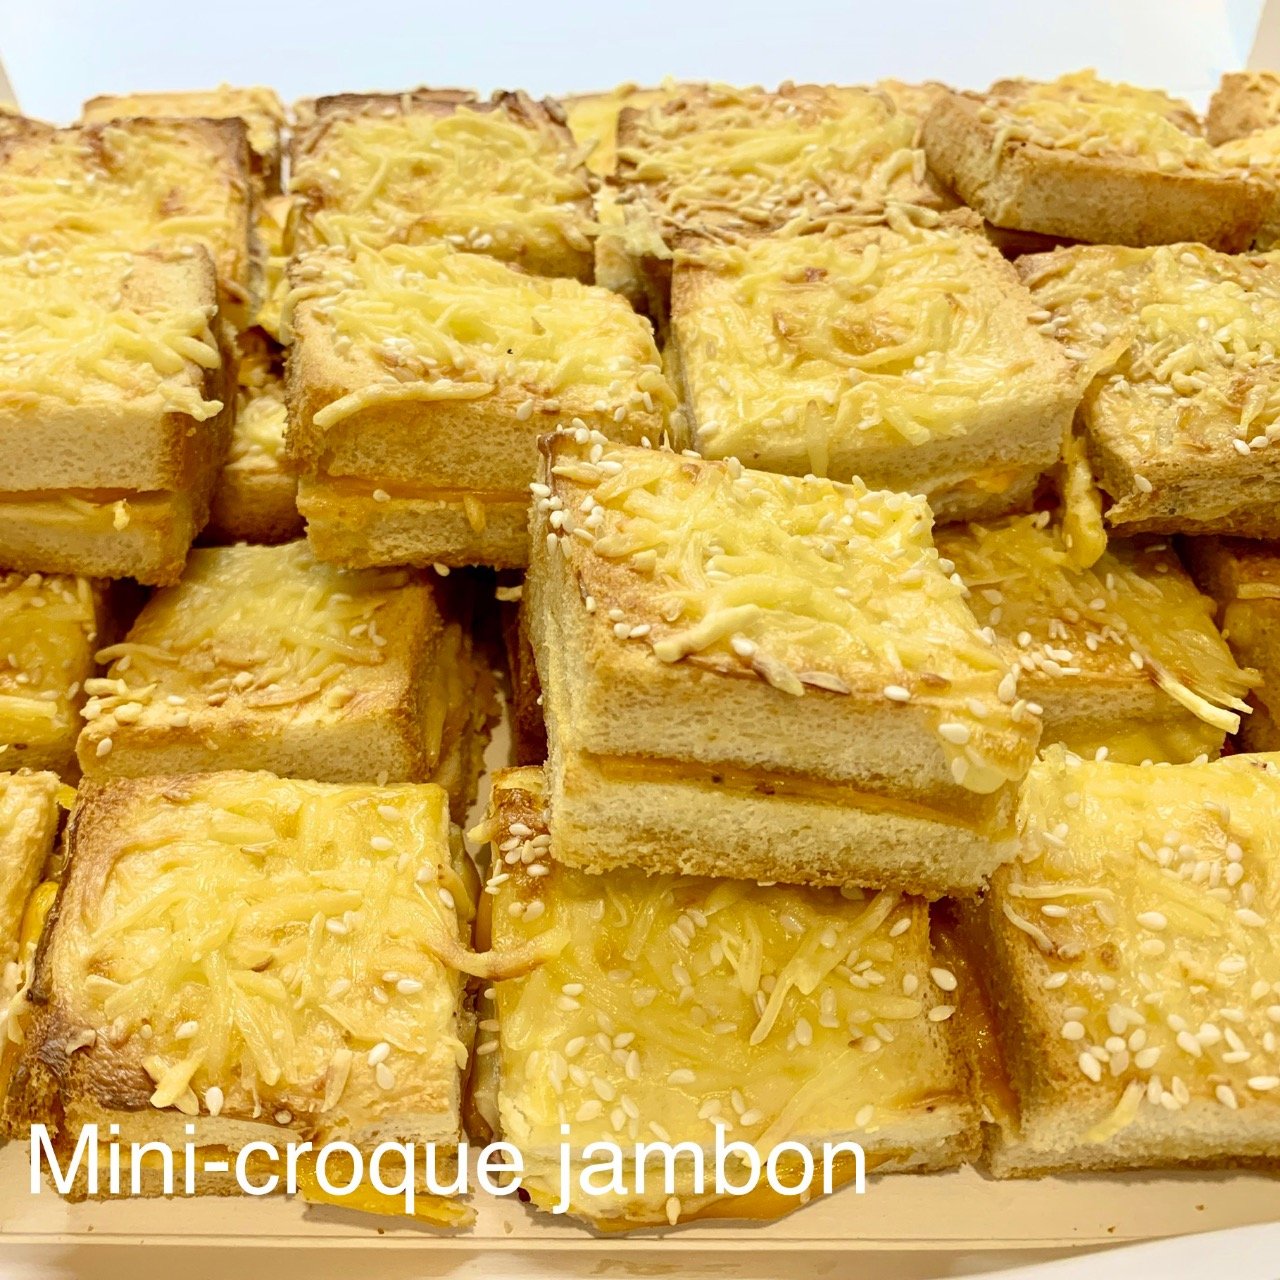 Mini Croque-monsieur jambon